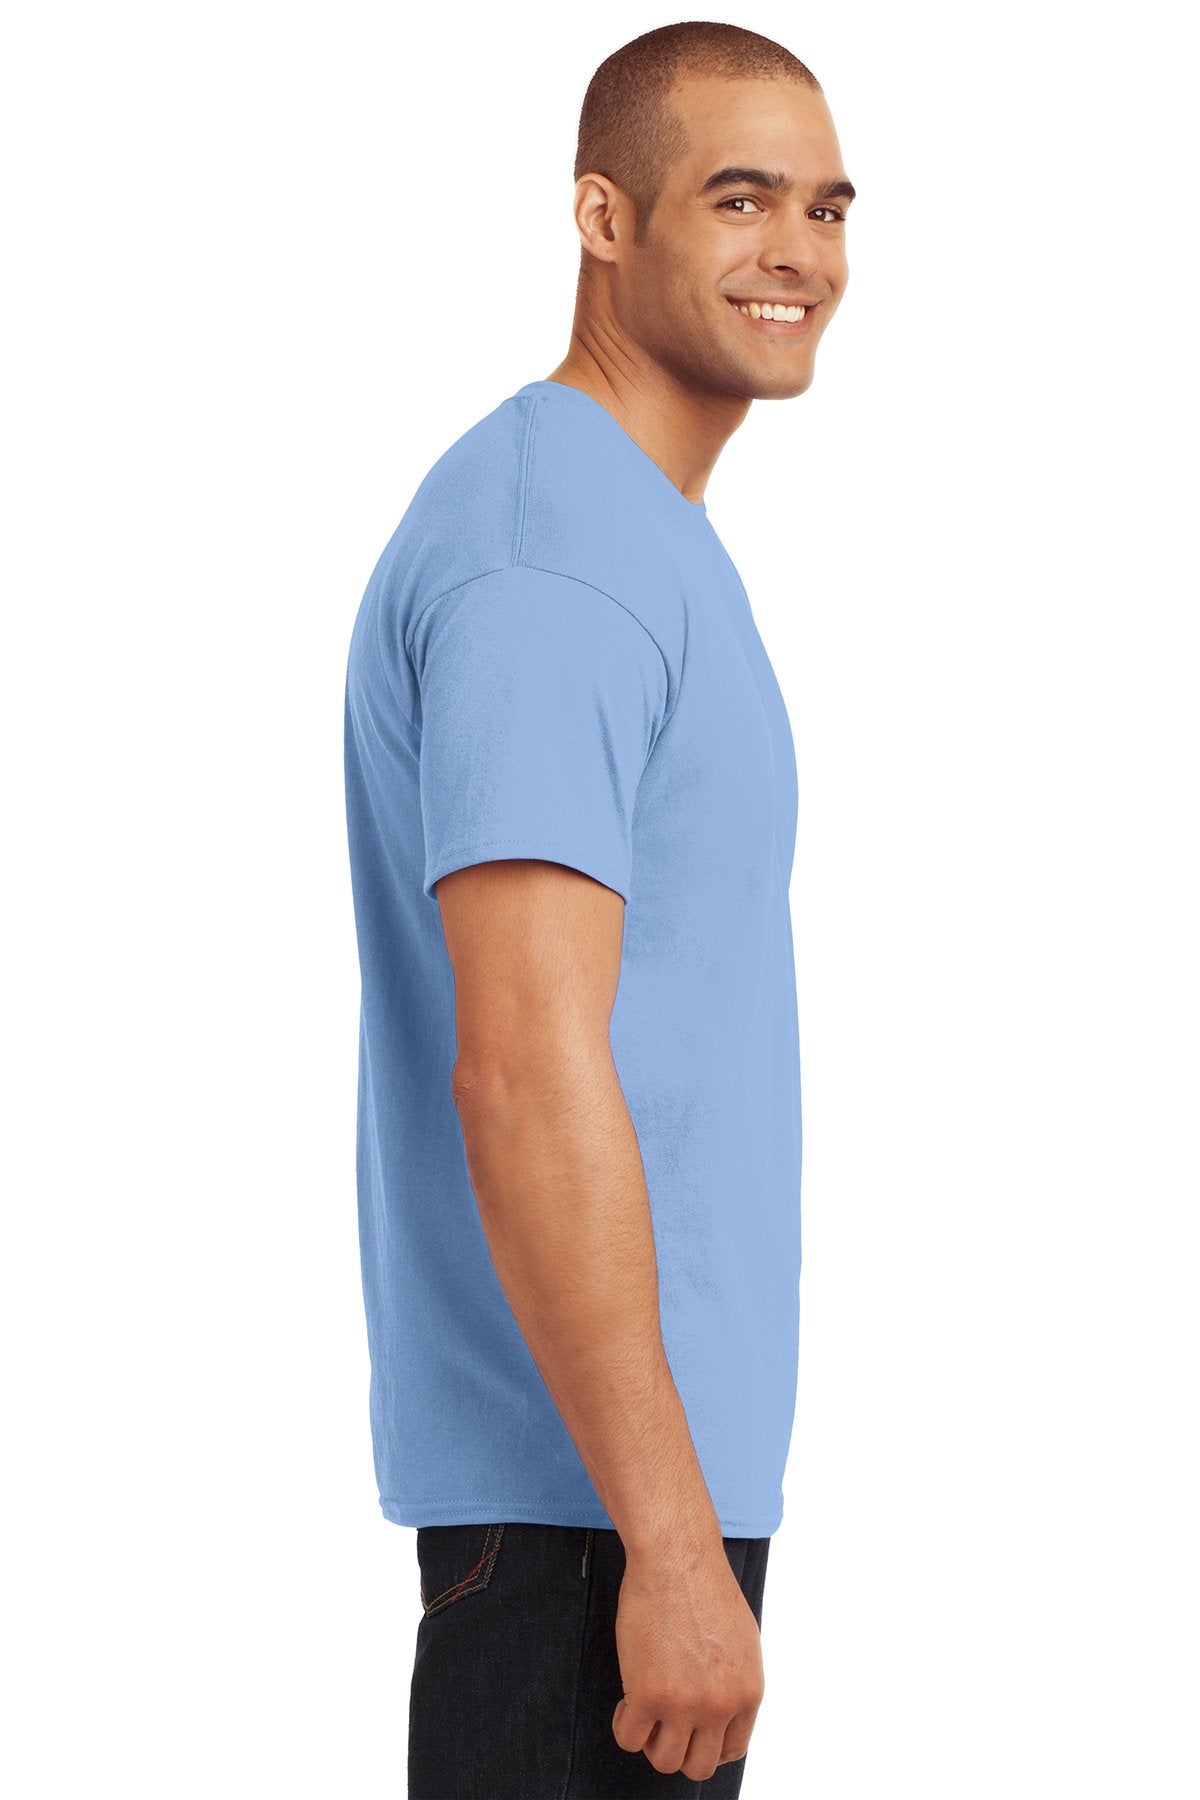 hanes ecosmart 50 50 cotton/poly t shirt 5170 light blue